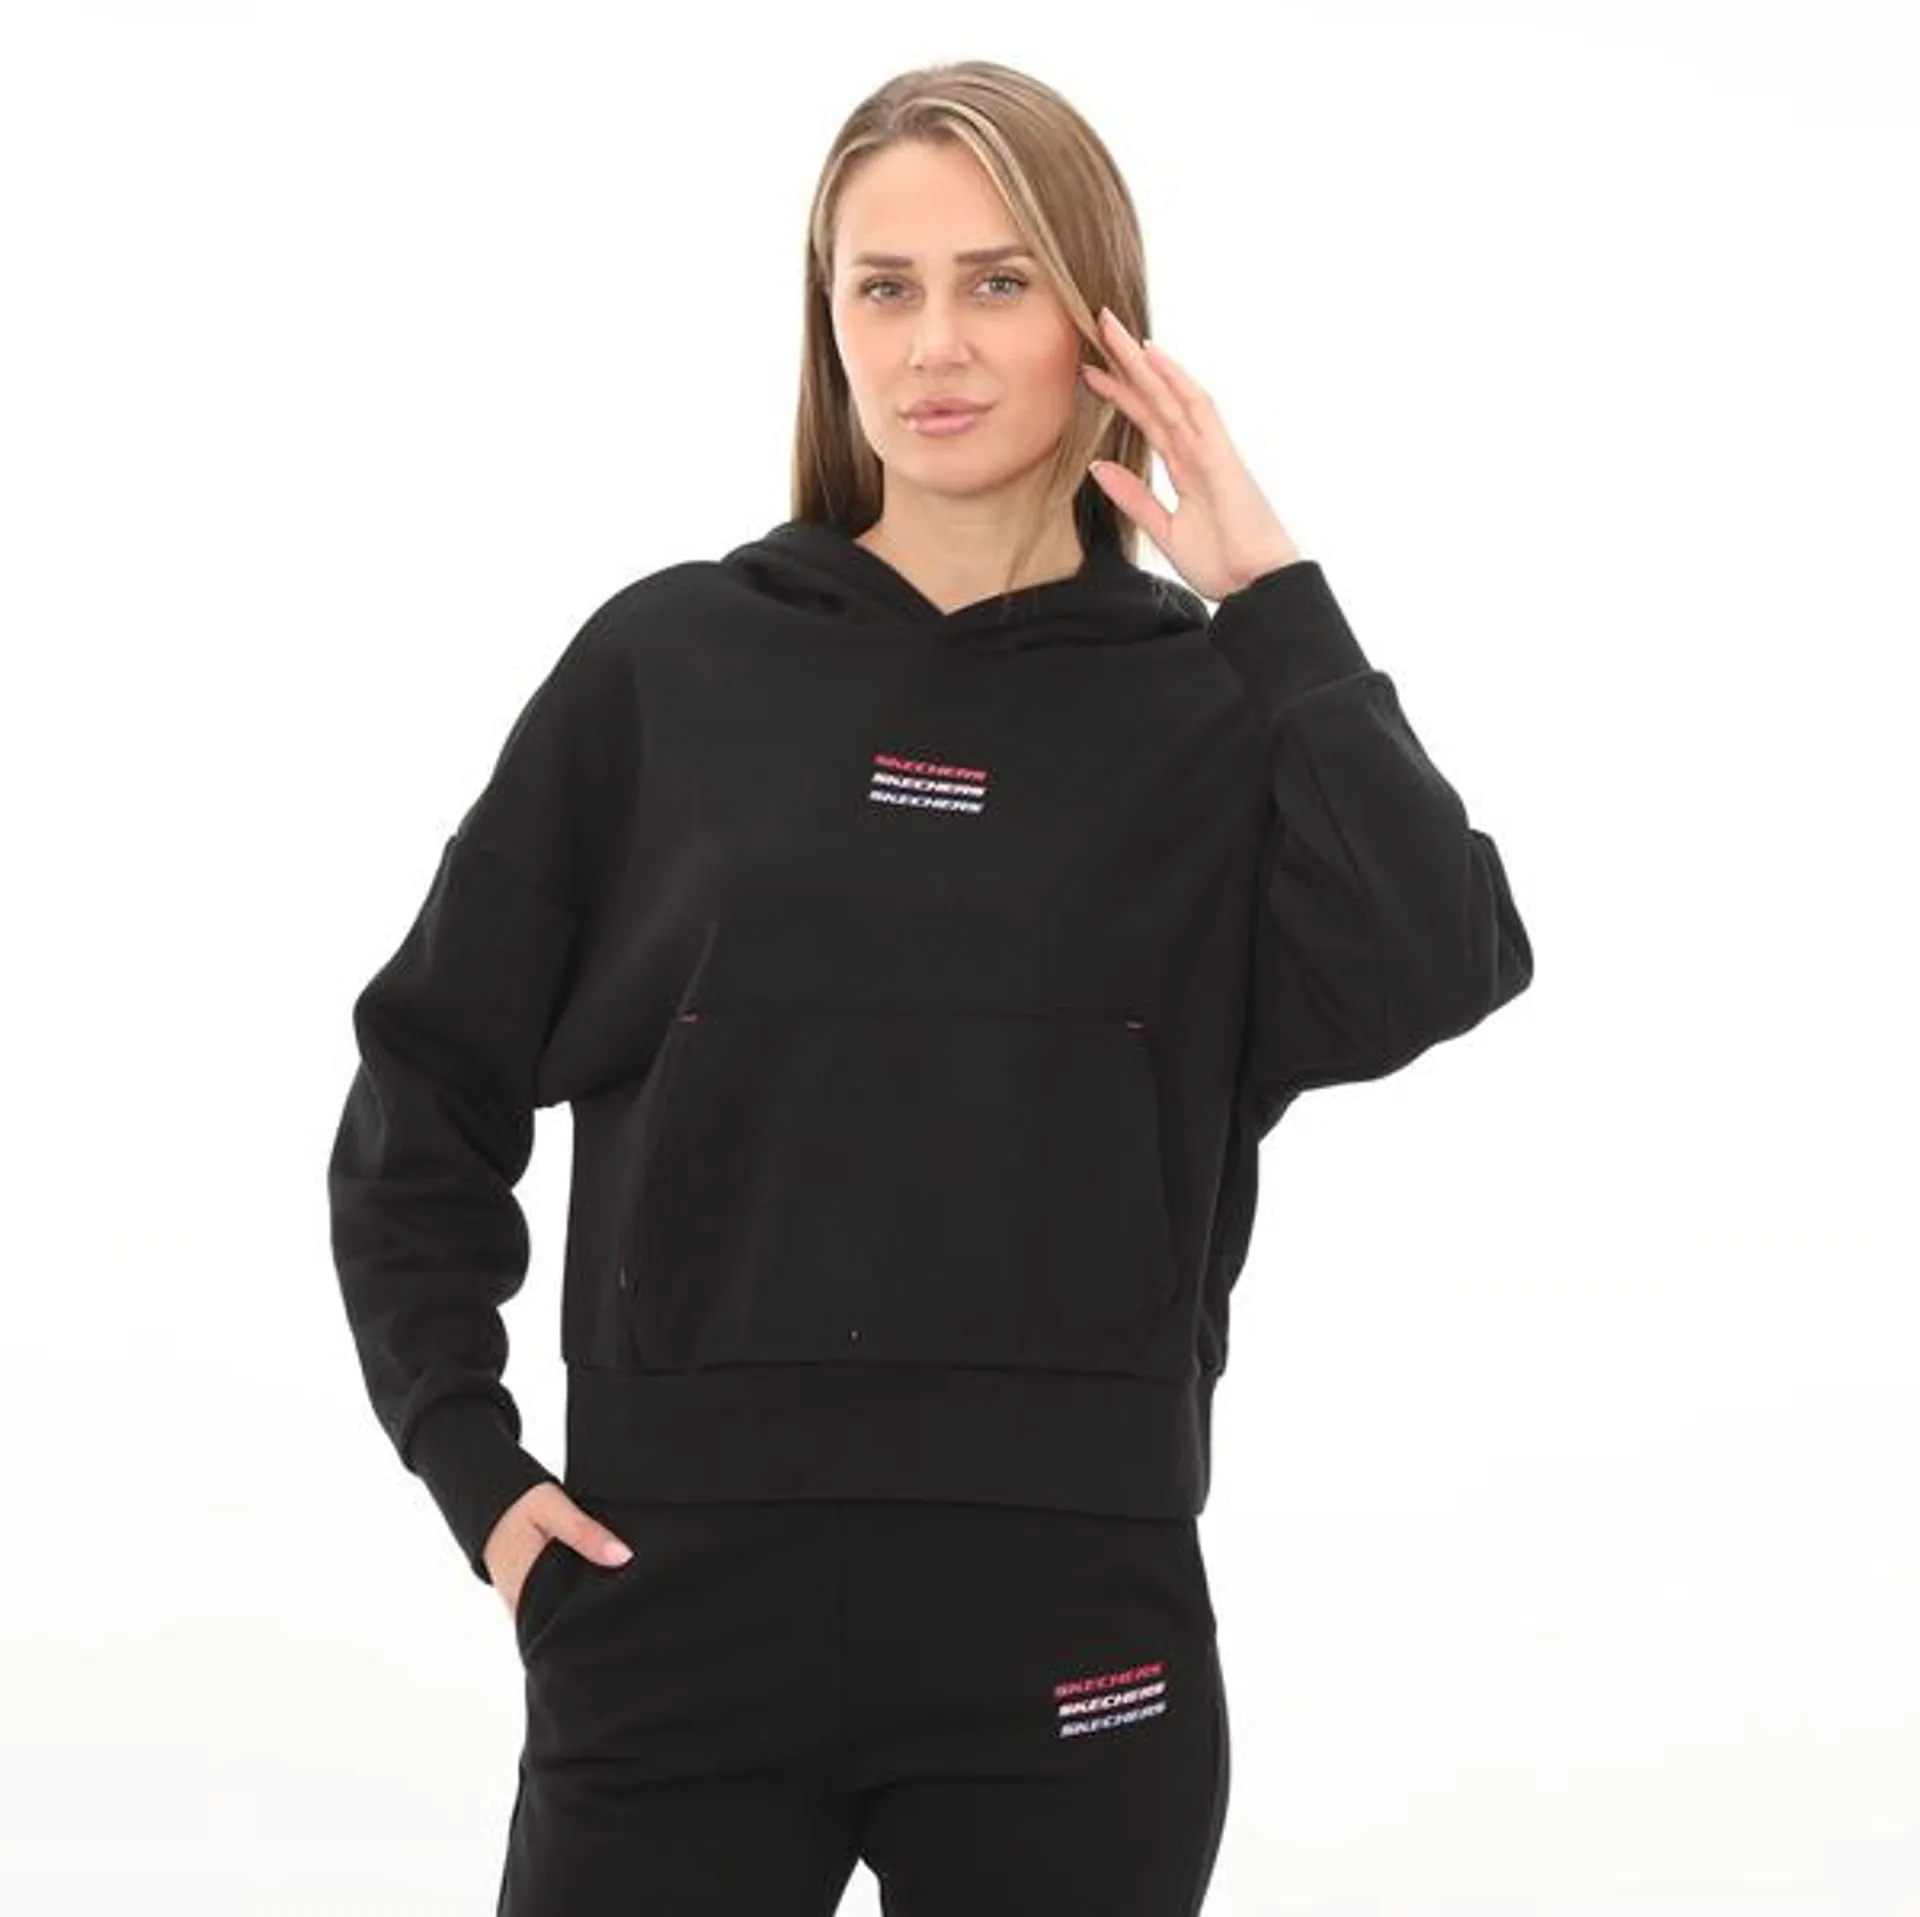 Skechers Flex Advantage 4.0 - Valkin Kadın Sweatshirt Siyah